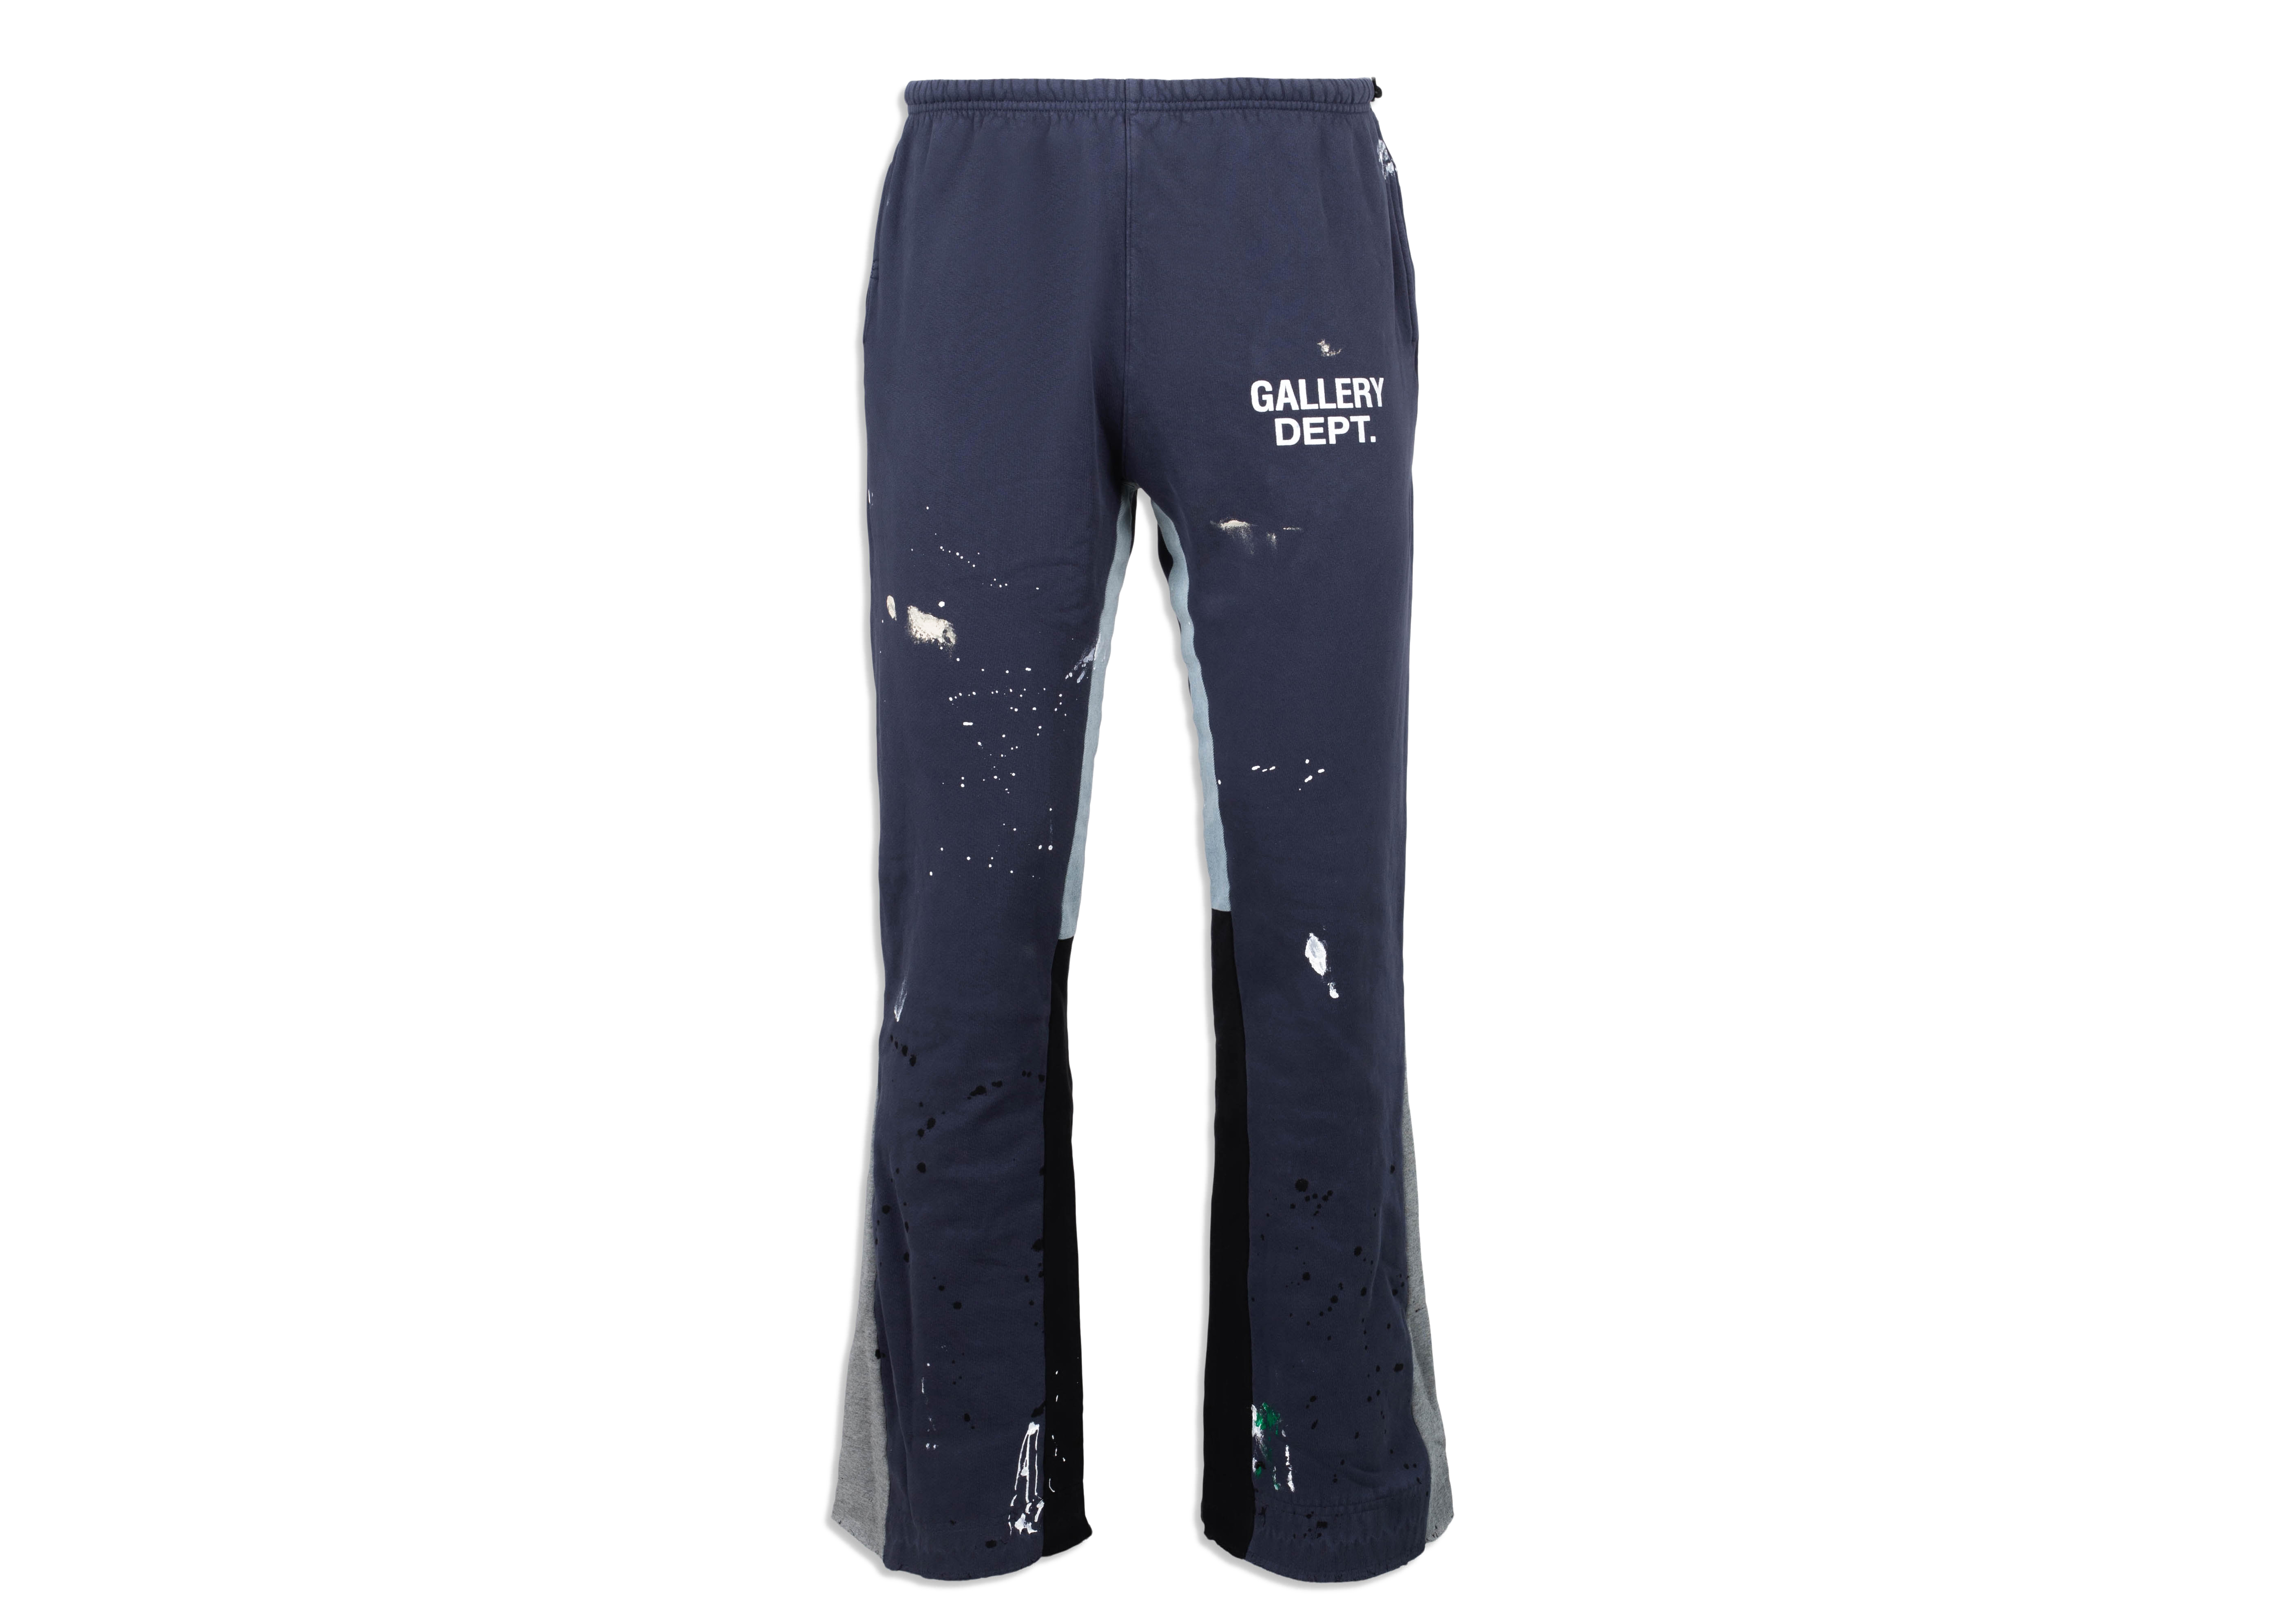 $98 Spyder Active Men's Jogger Pants ProWeb Activewear Sweatpants